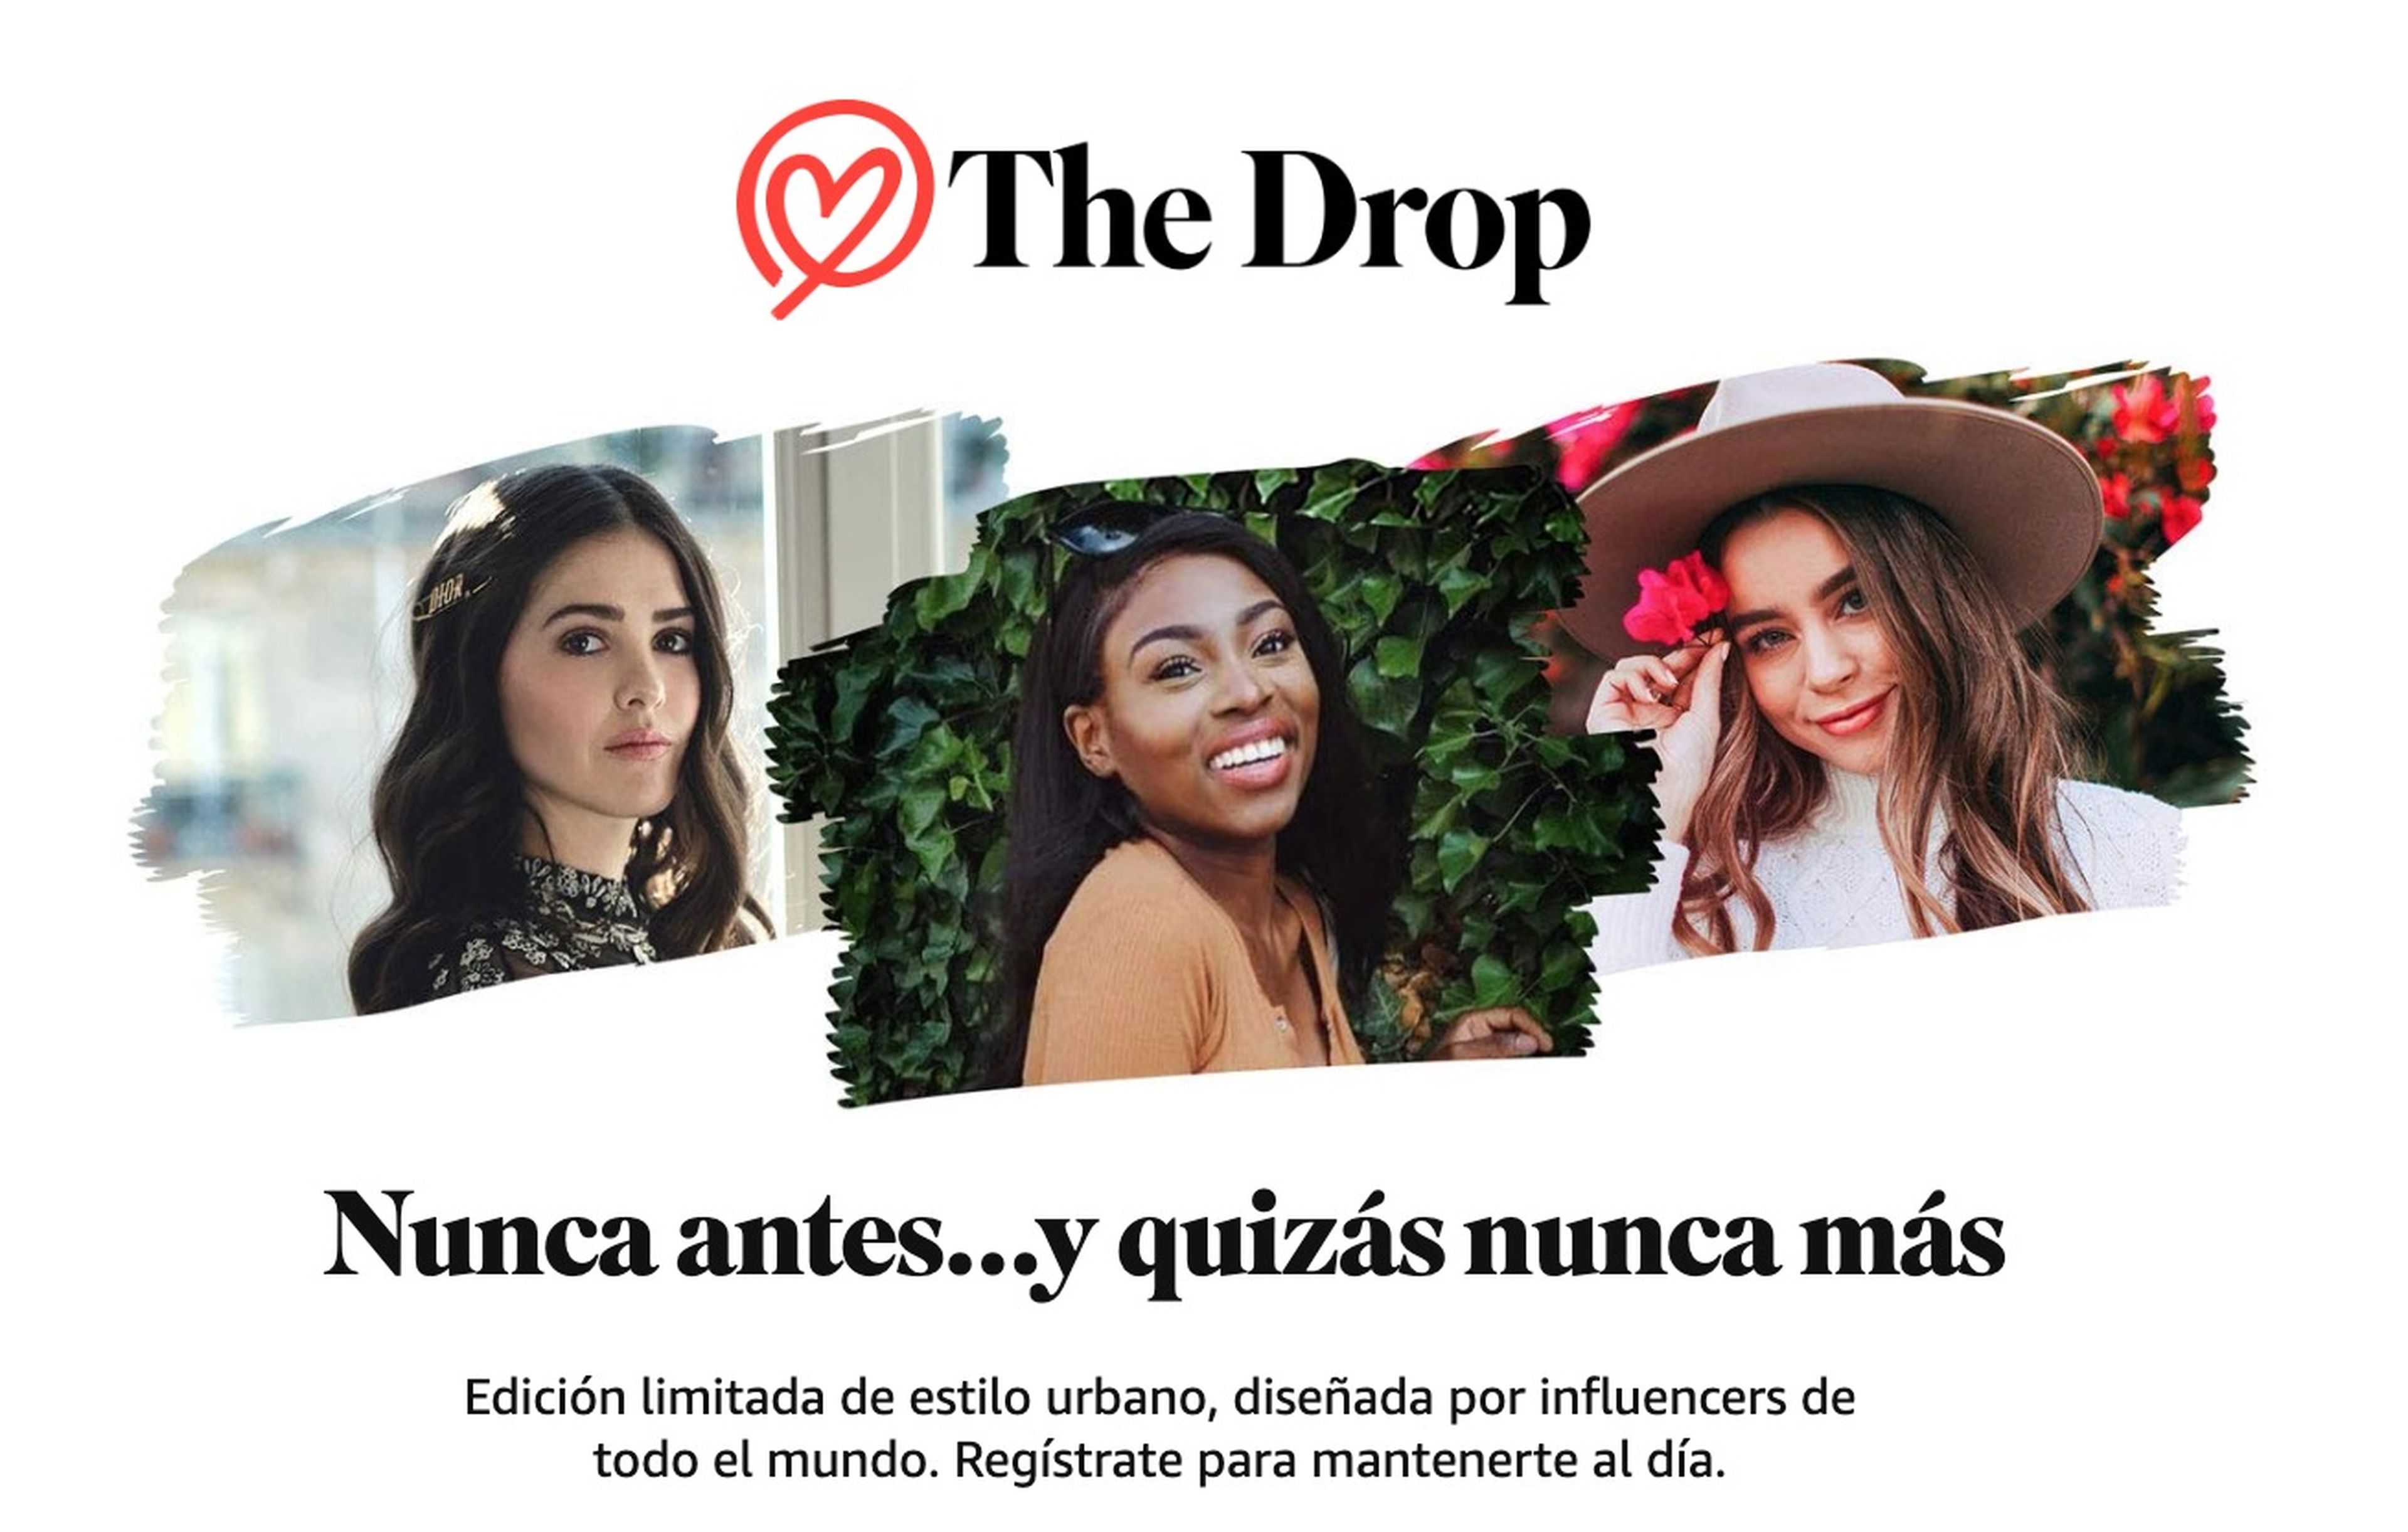 The Drop de Amazon